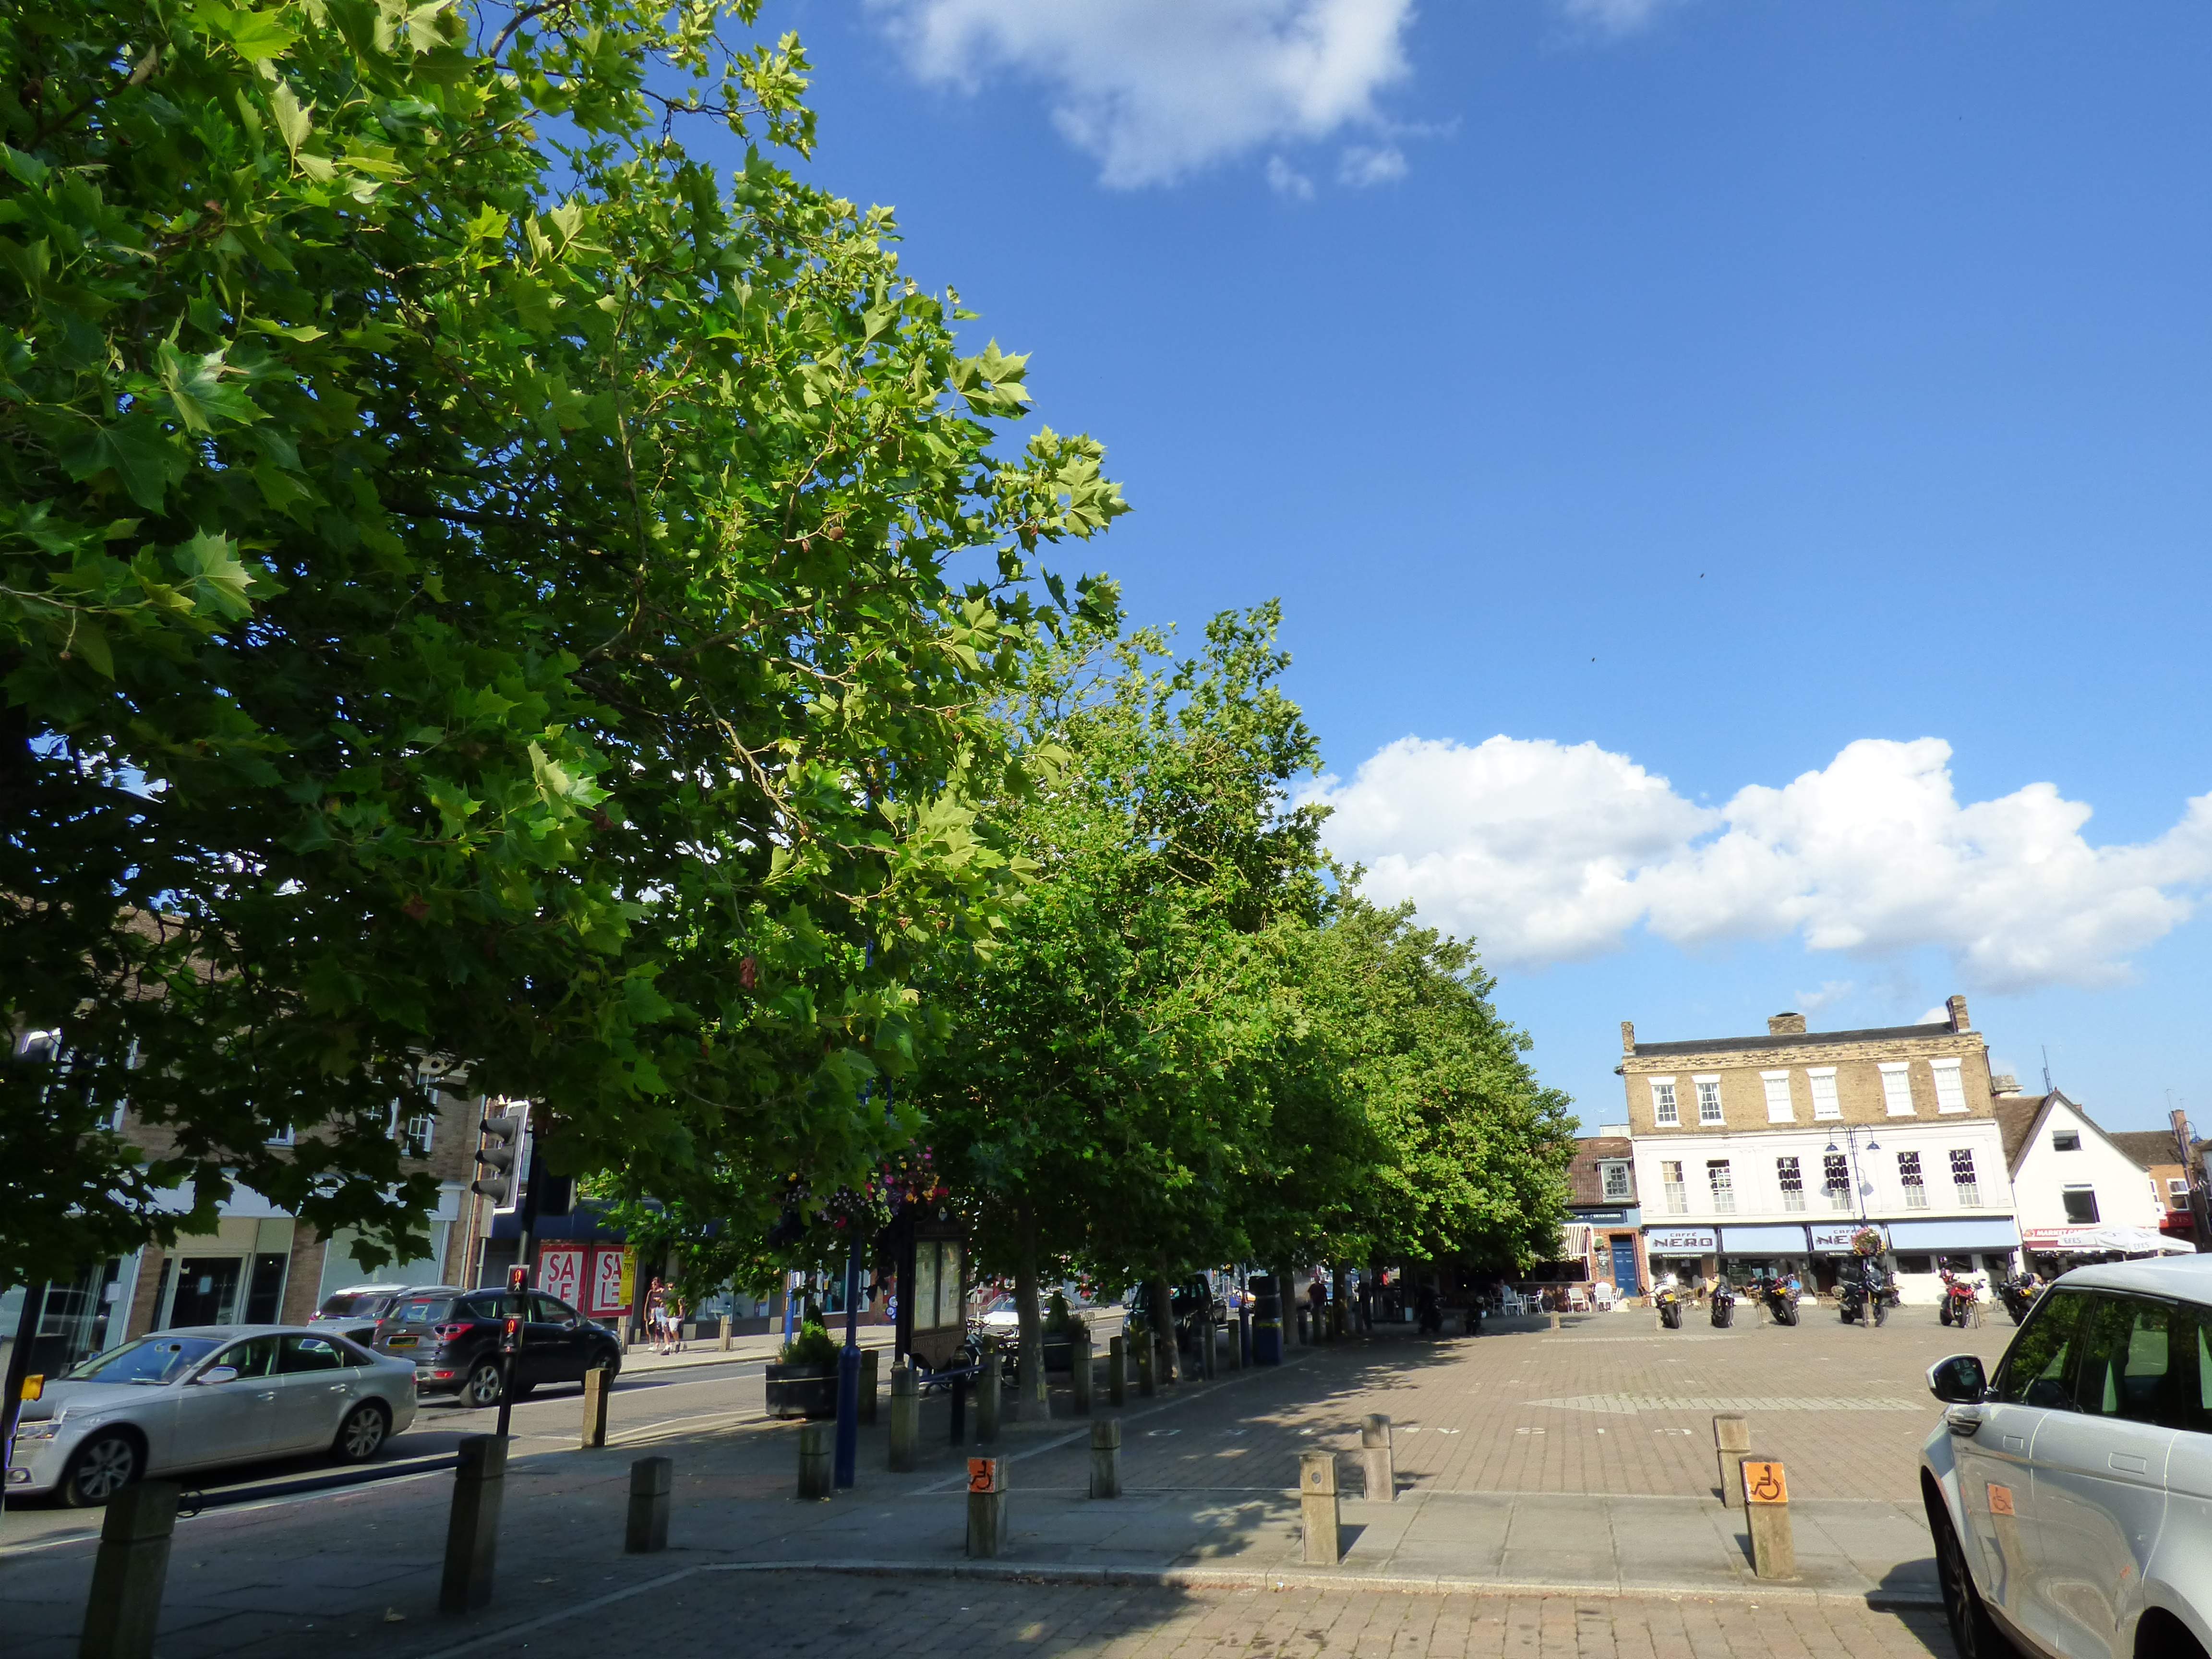 St Neots Market Square